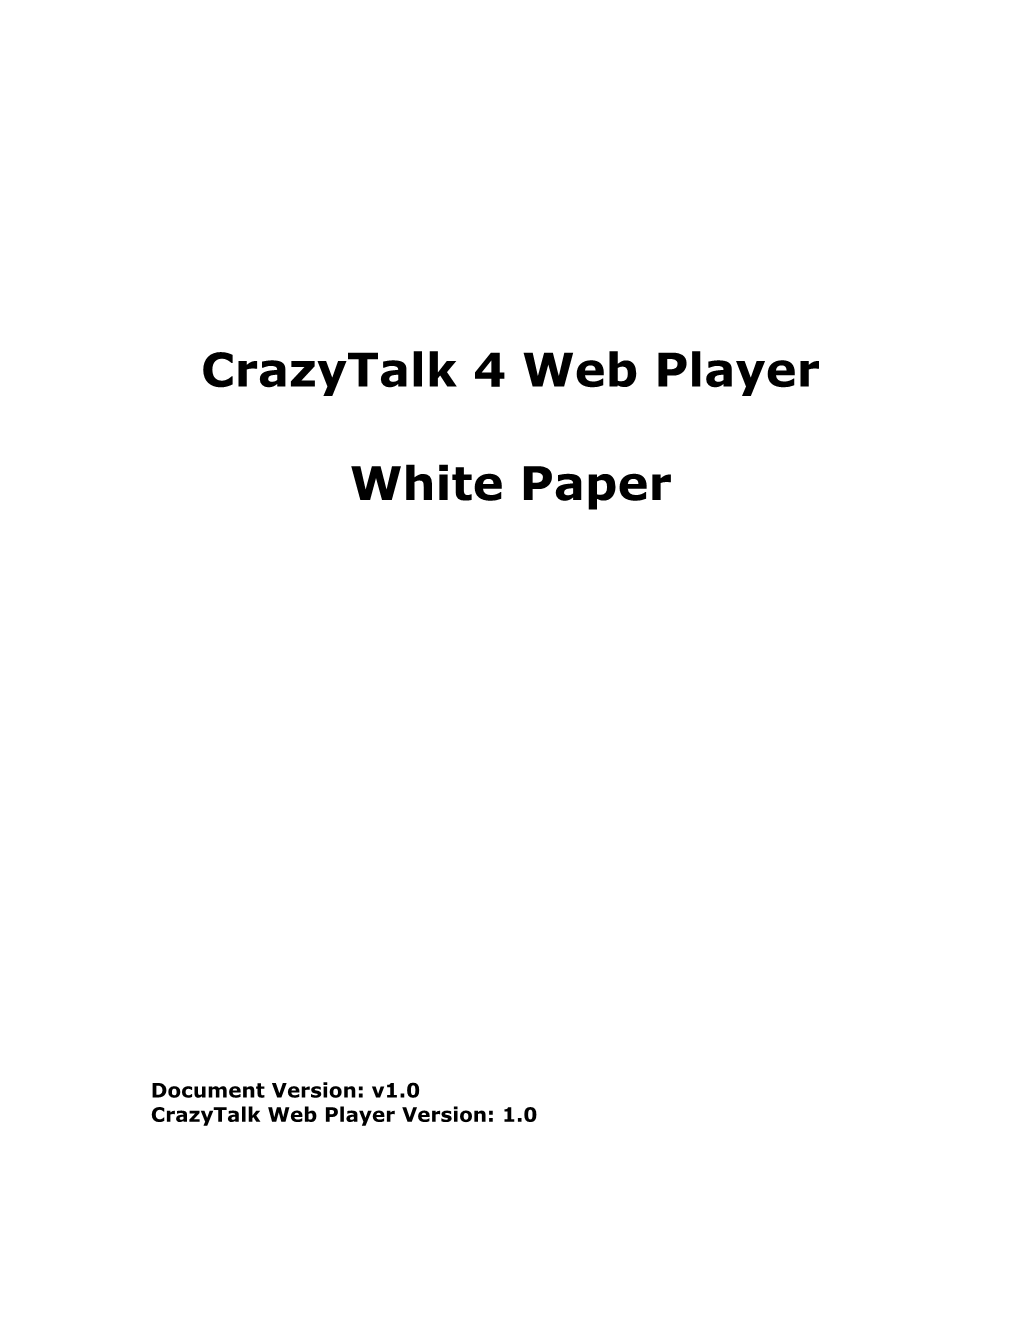 Crazytalk 4 Web Player Method Summary